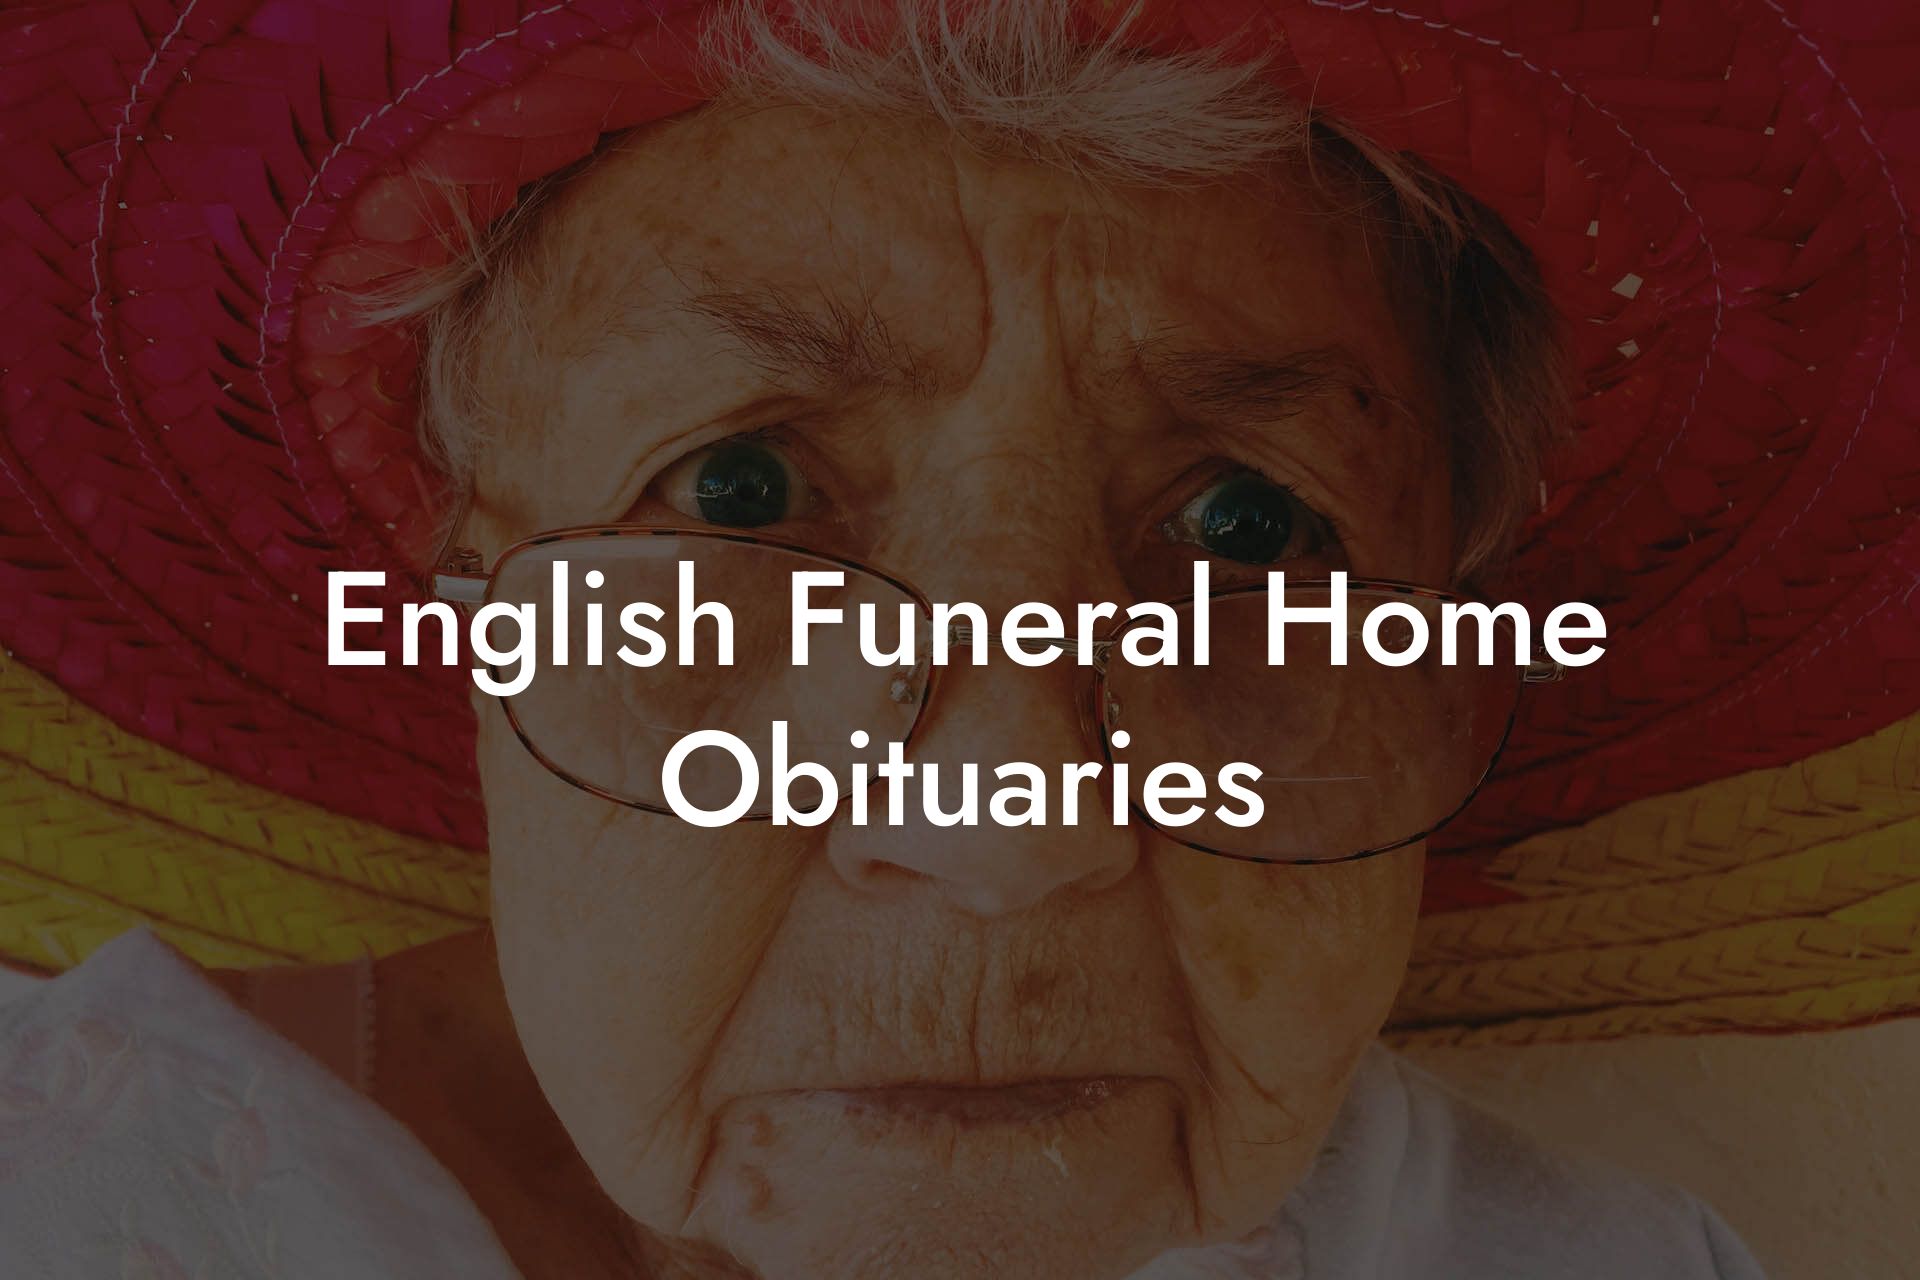 English Funeral Home Obituaries